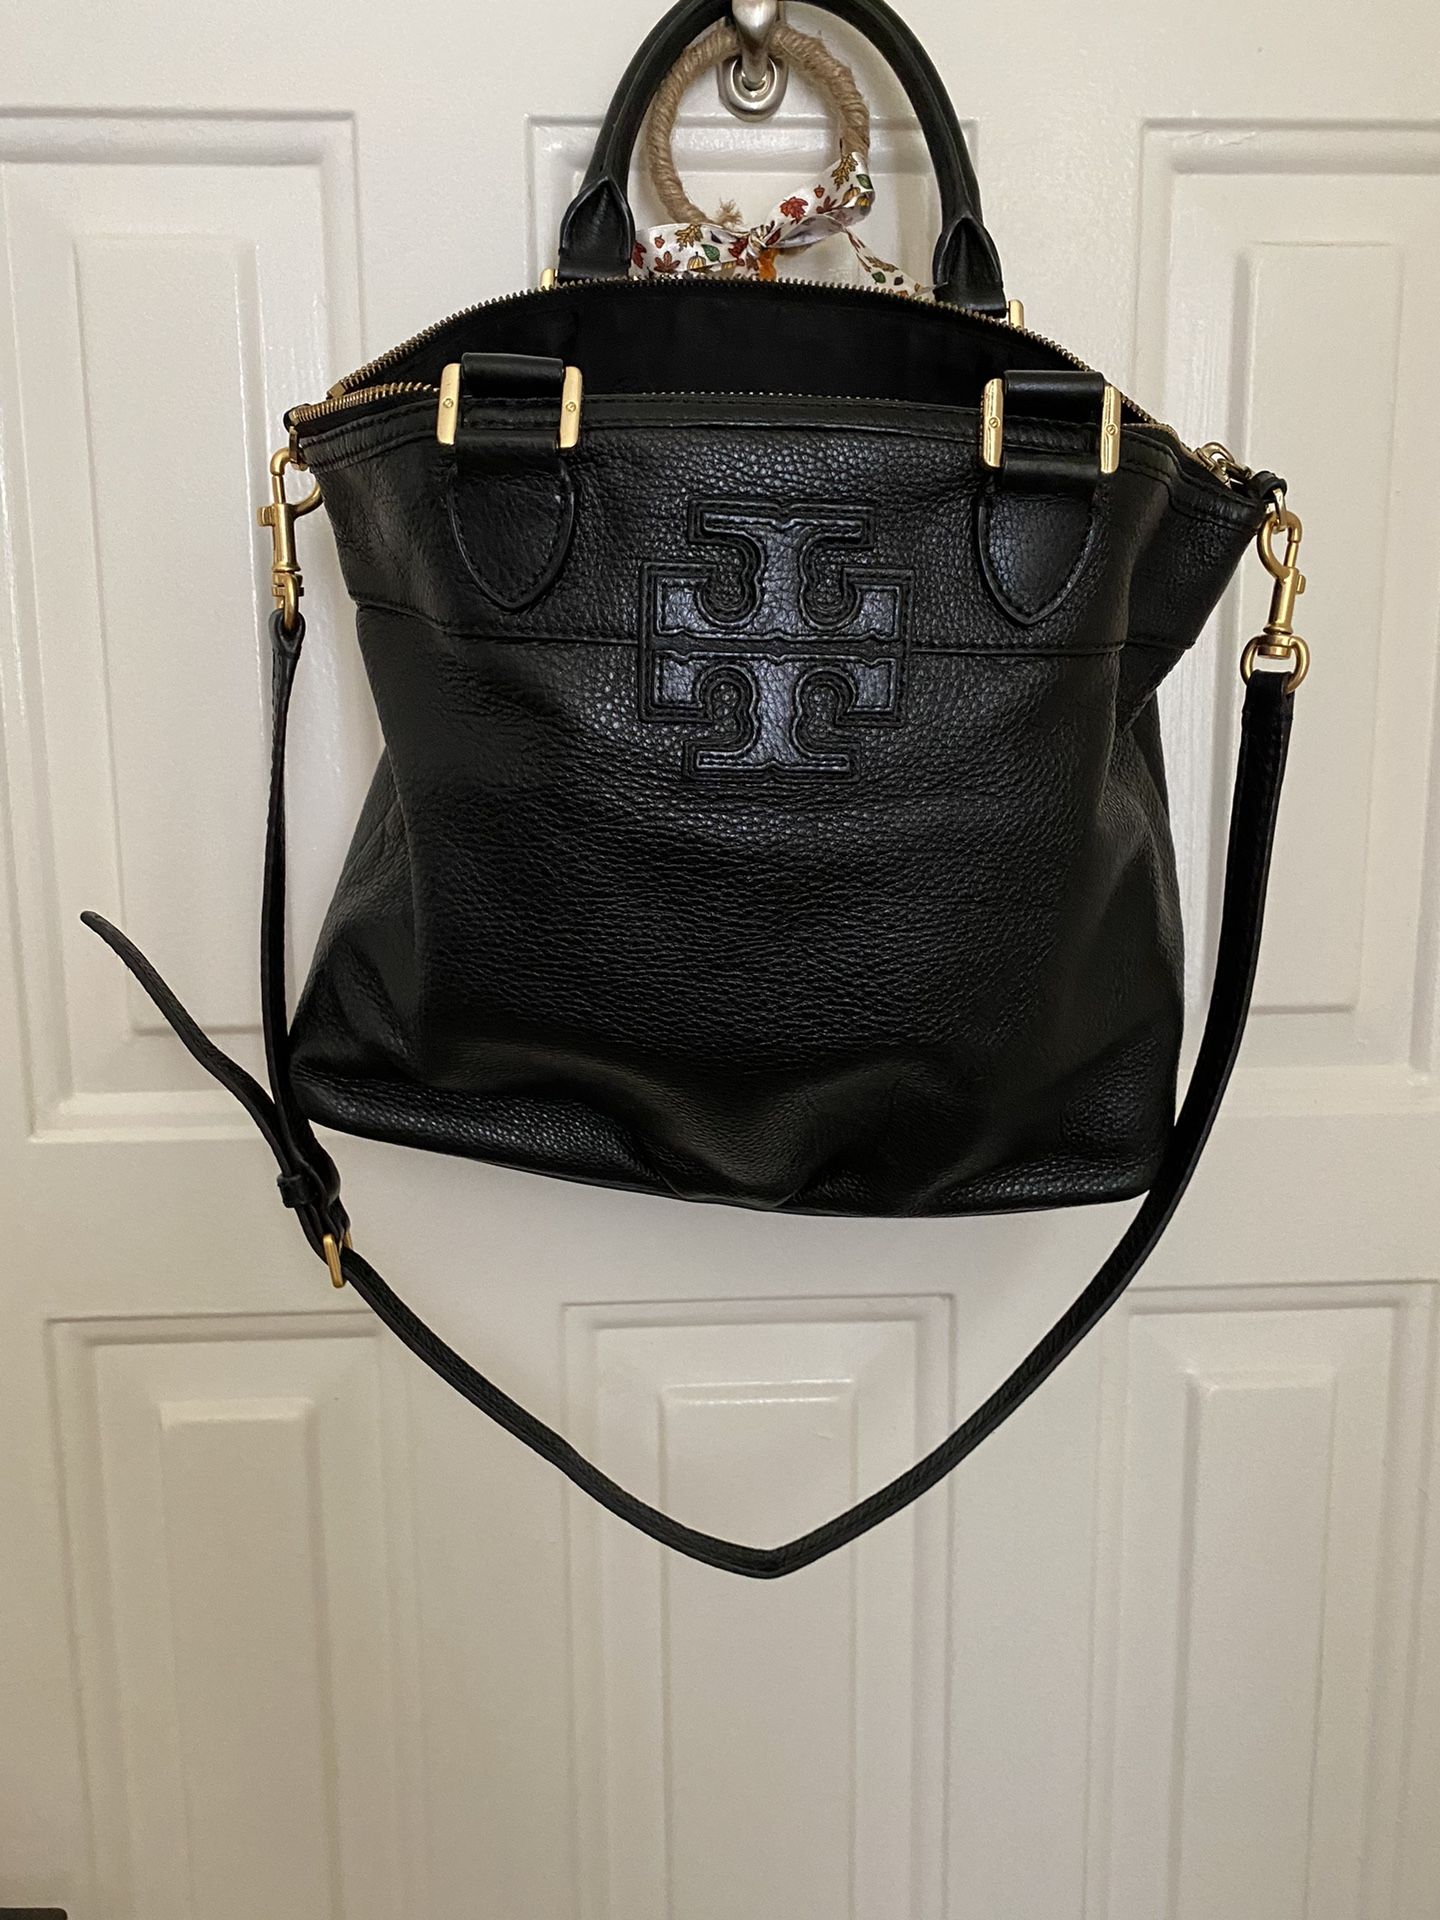 Vintage Tory Burch Black Pebbled Leather Crossbody Bag w Handles $85